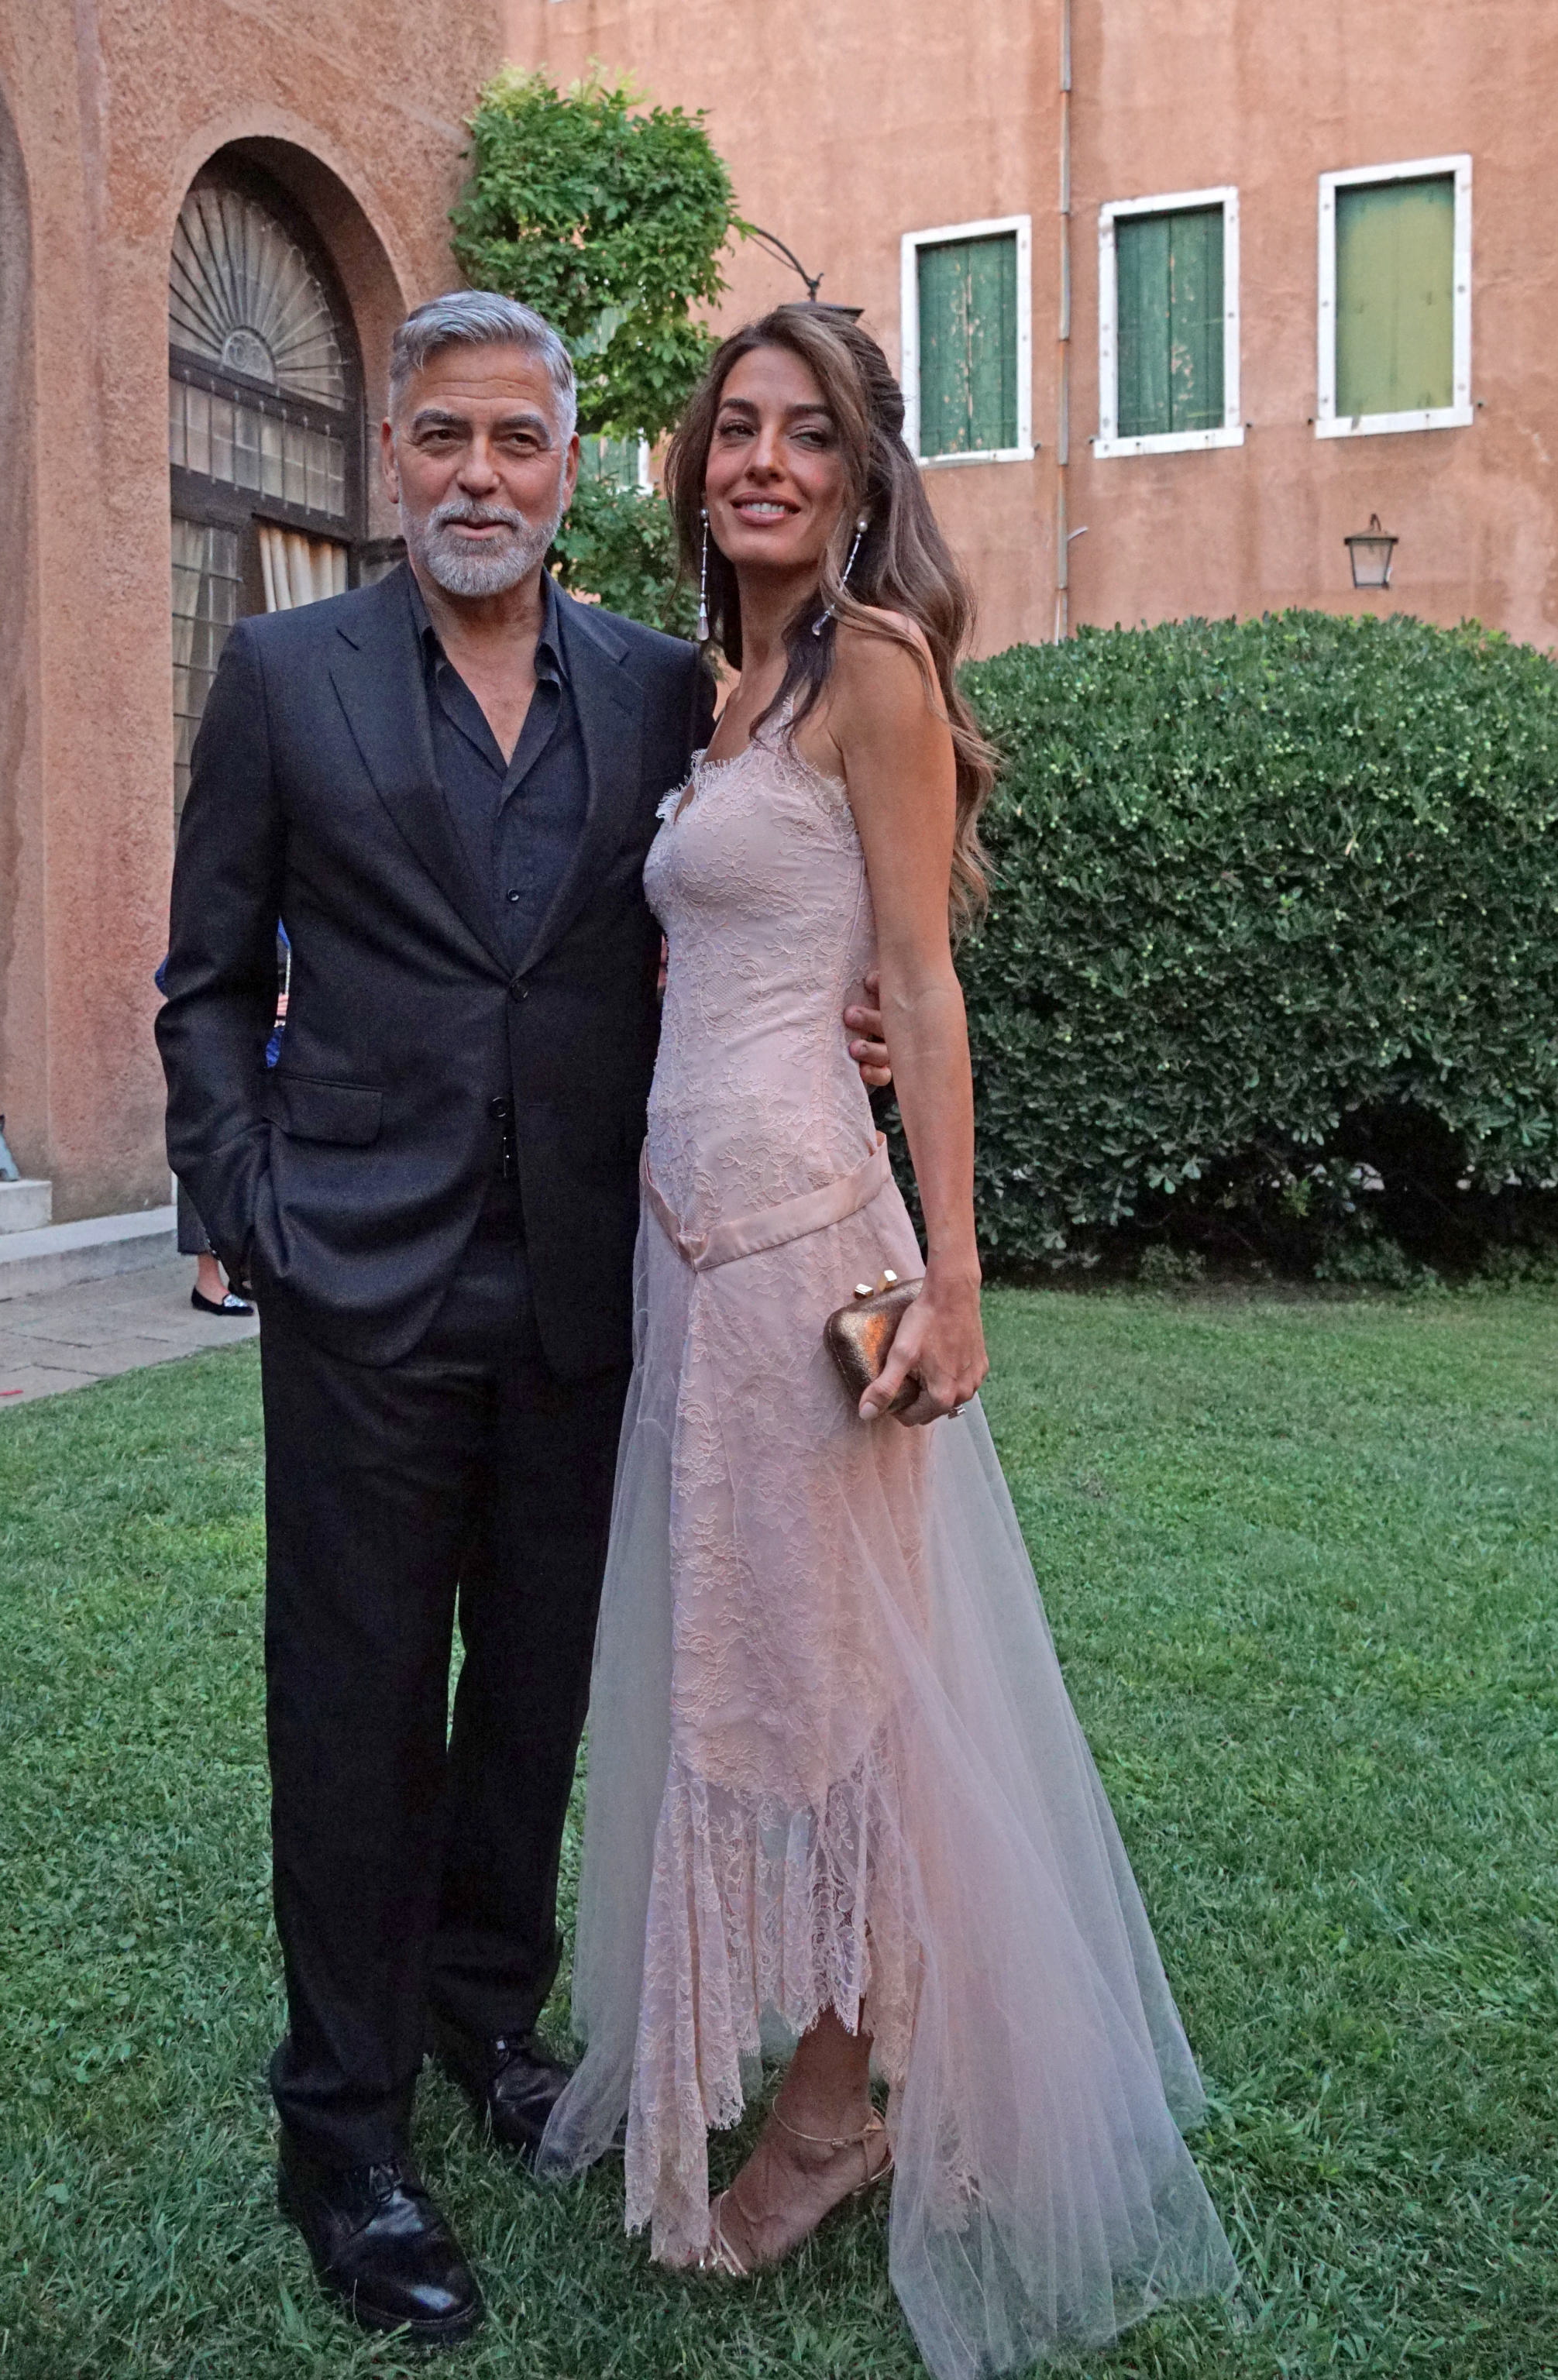 George Clooney και Amal